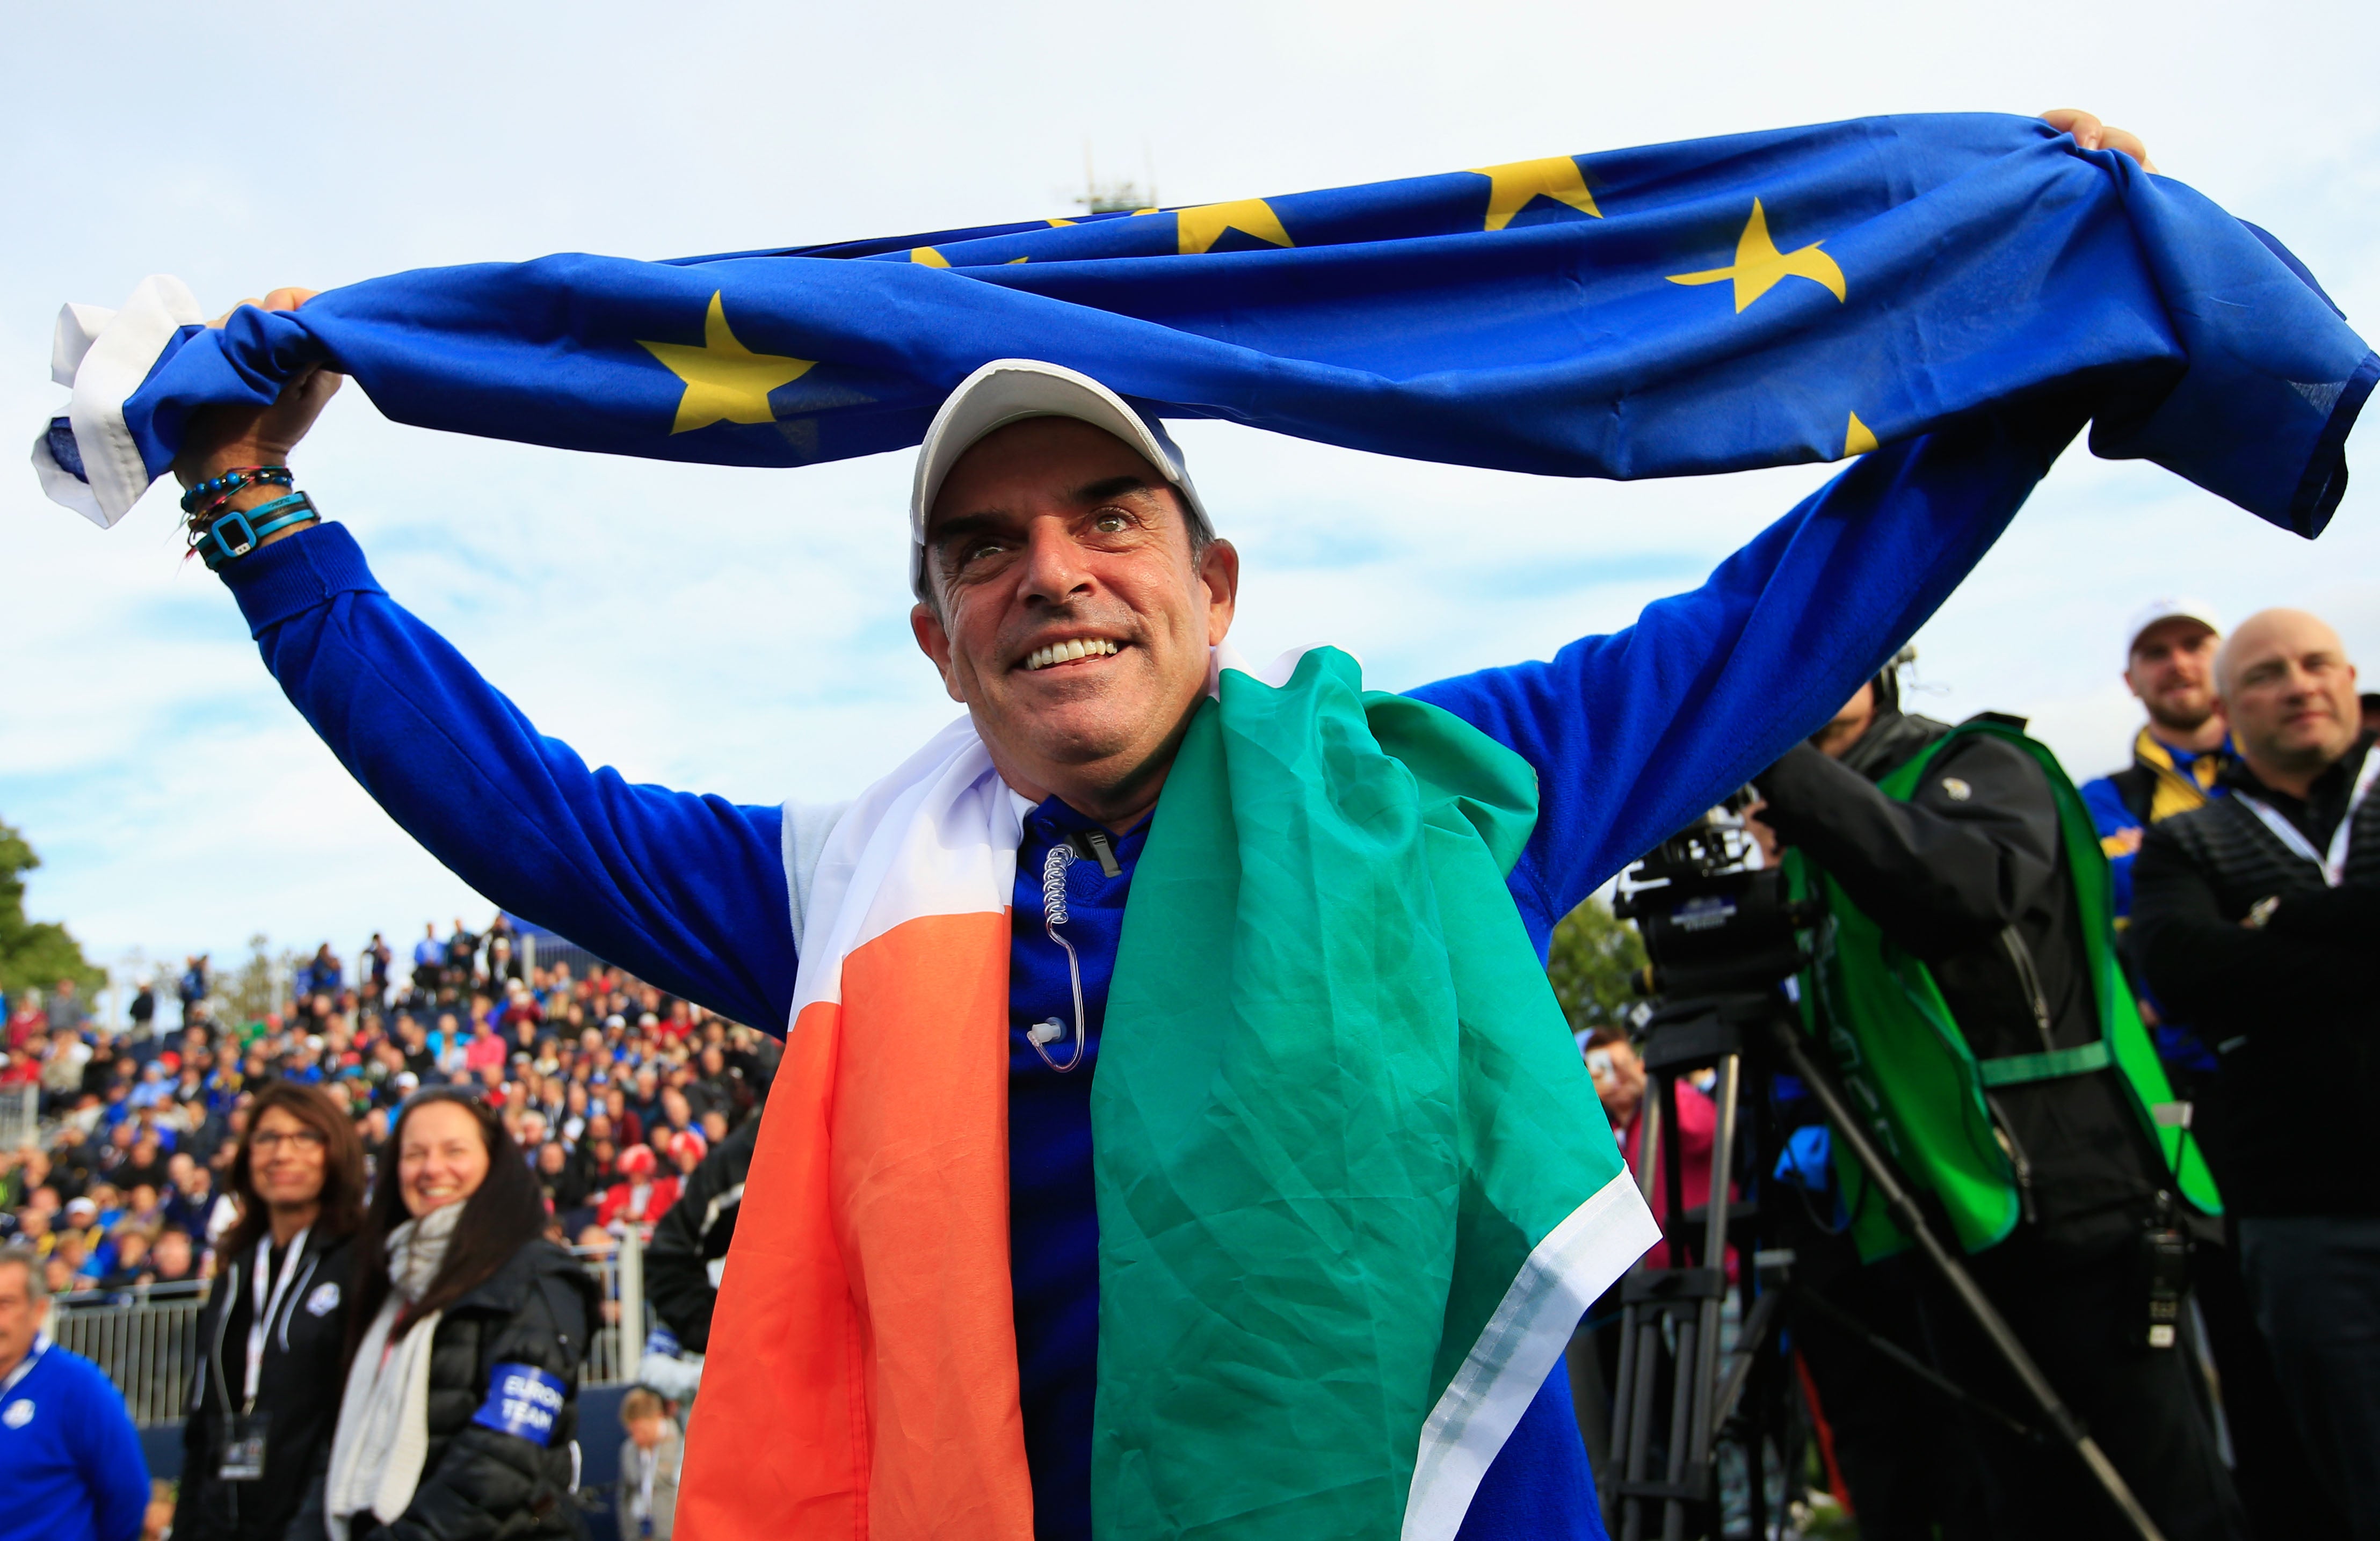 Paul McGinley celebrates Team Europe’s win at Gleneagles in 2014